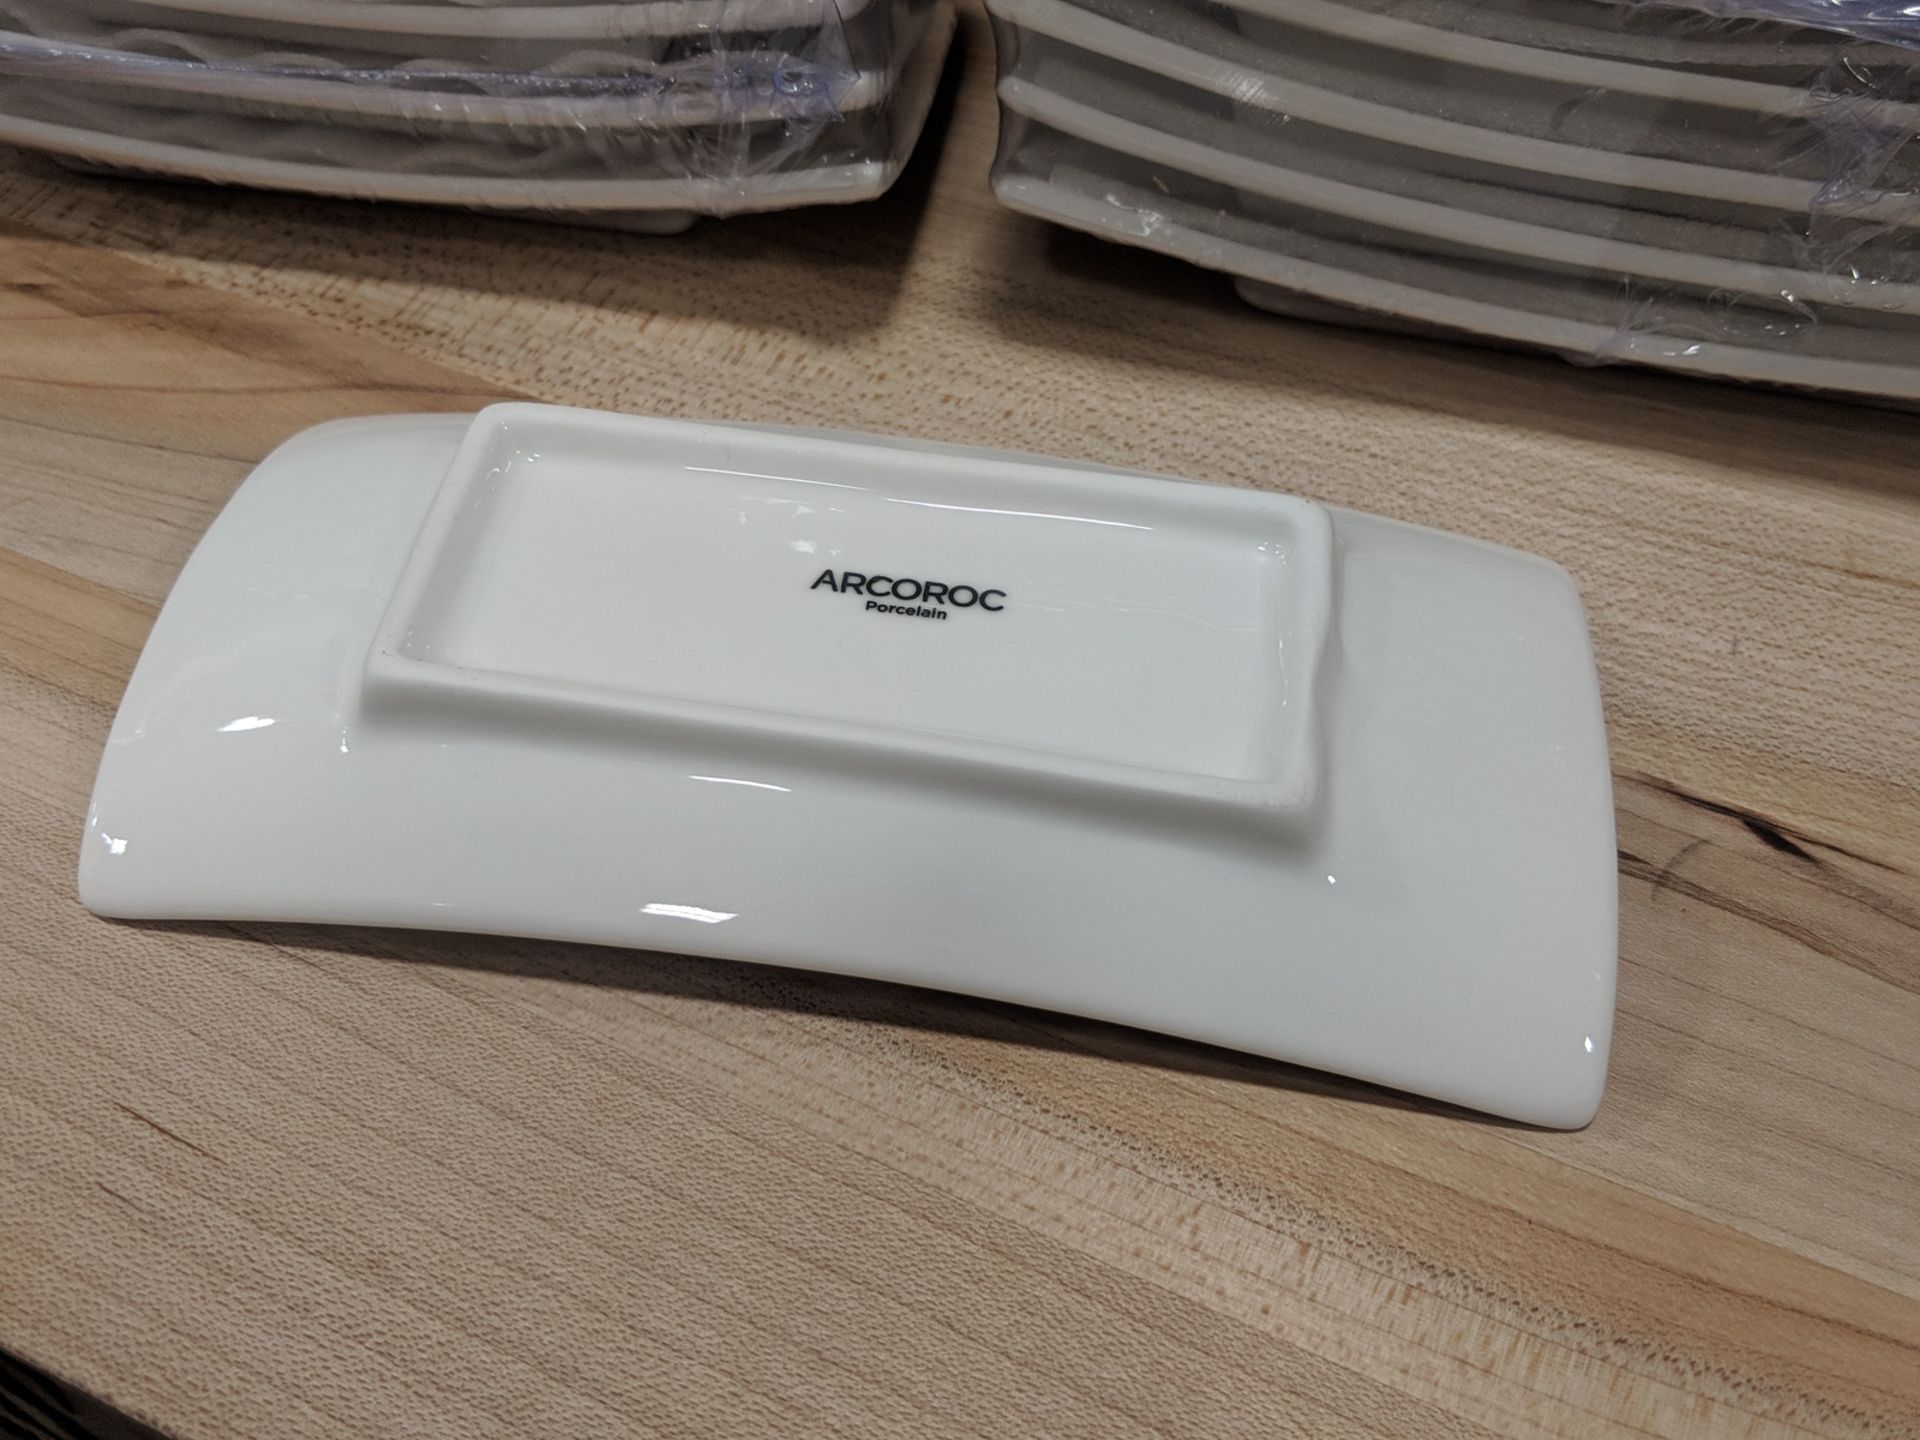 5-5/8" x 2-3/4" White Porcelain Rectangular Appetizer Plates, Arcoroc R0736 - Lot of 24 (1 Case) - Image 2 of 6